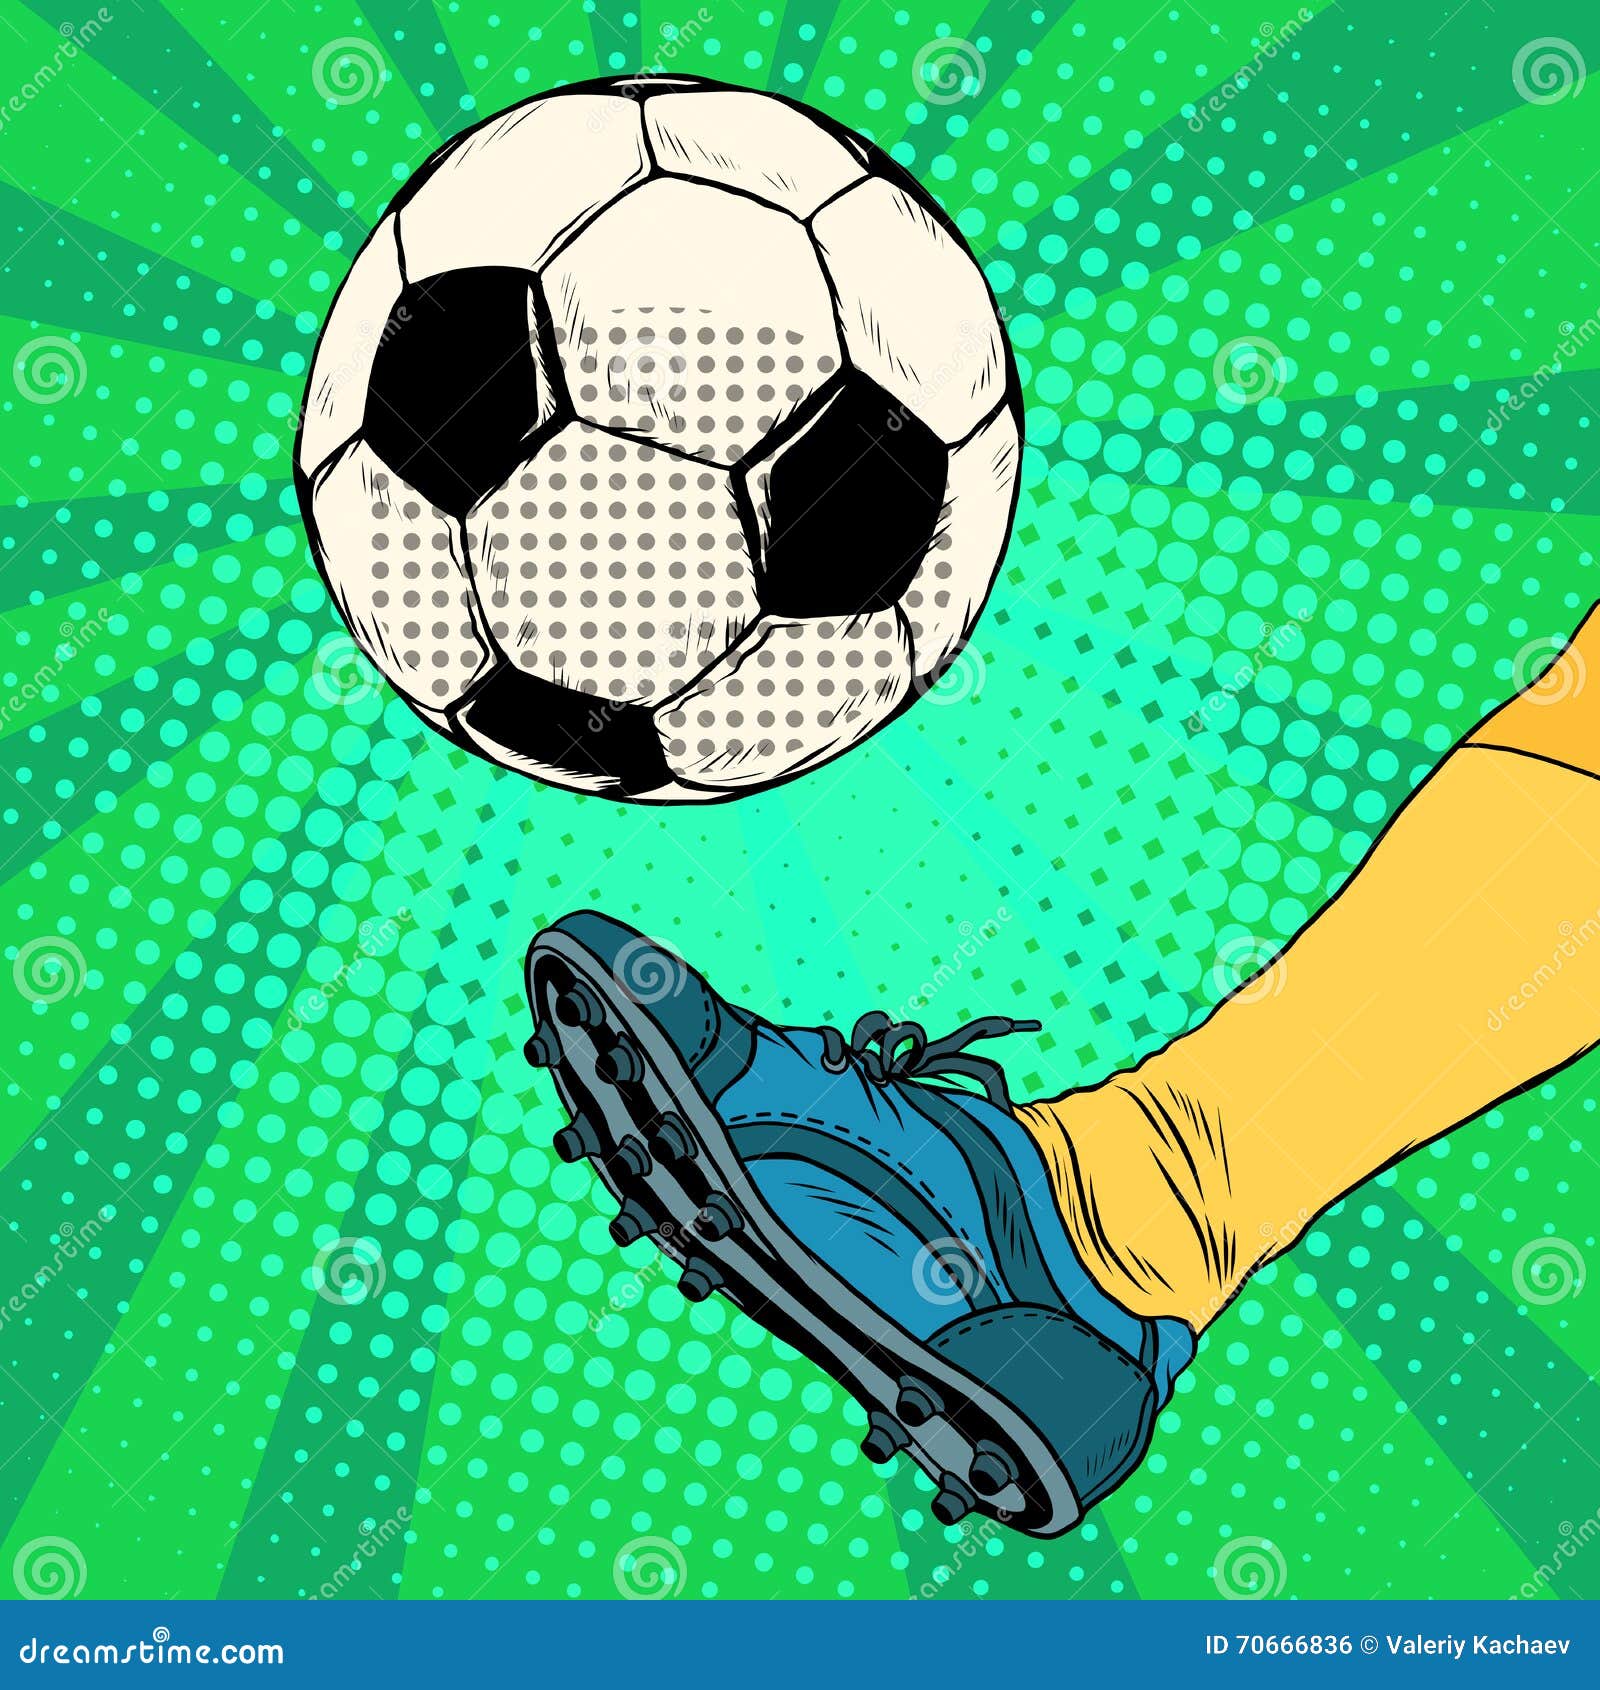 kick a soccer ball